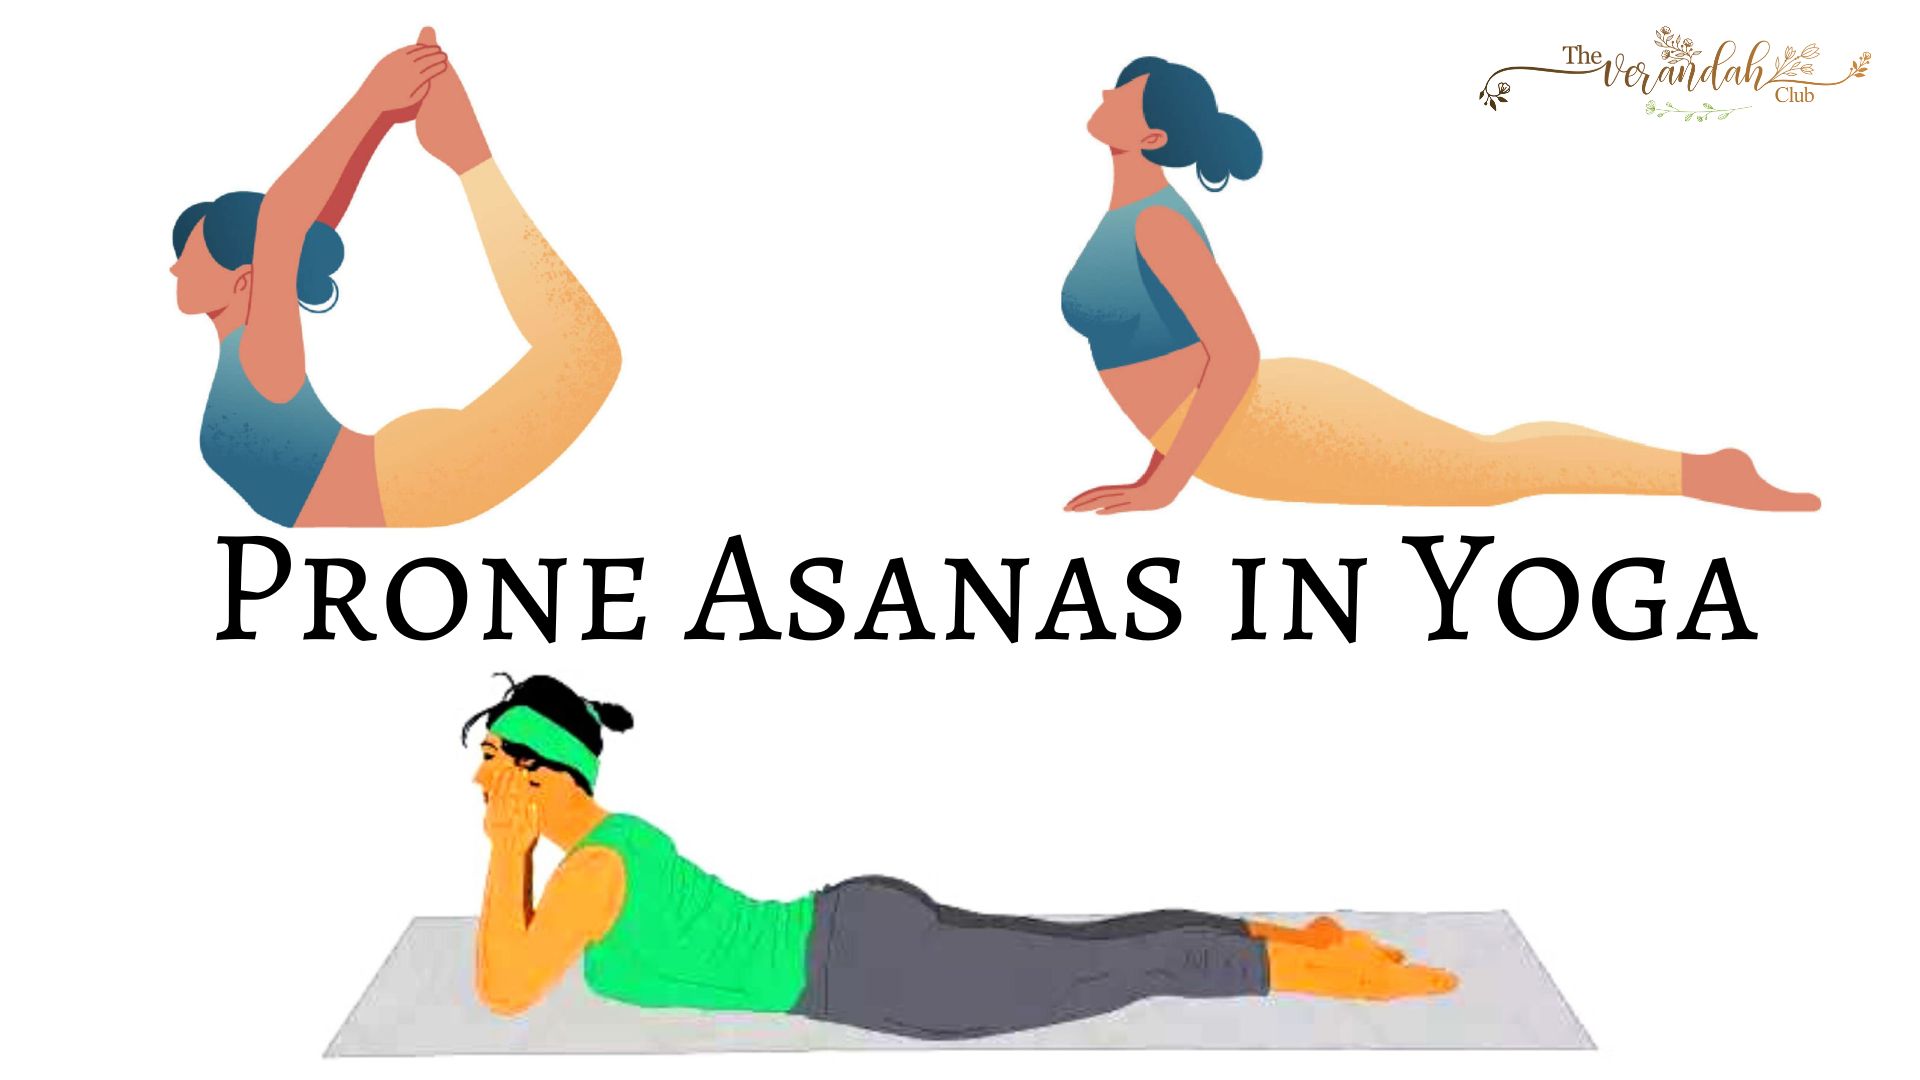 Prone Asanas in Yoga